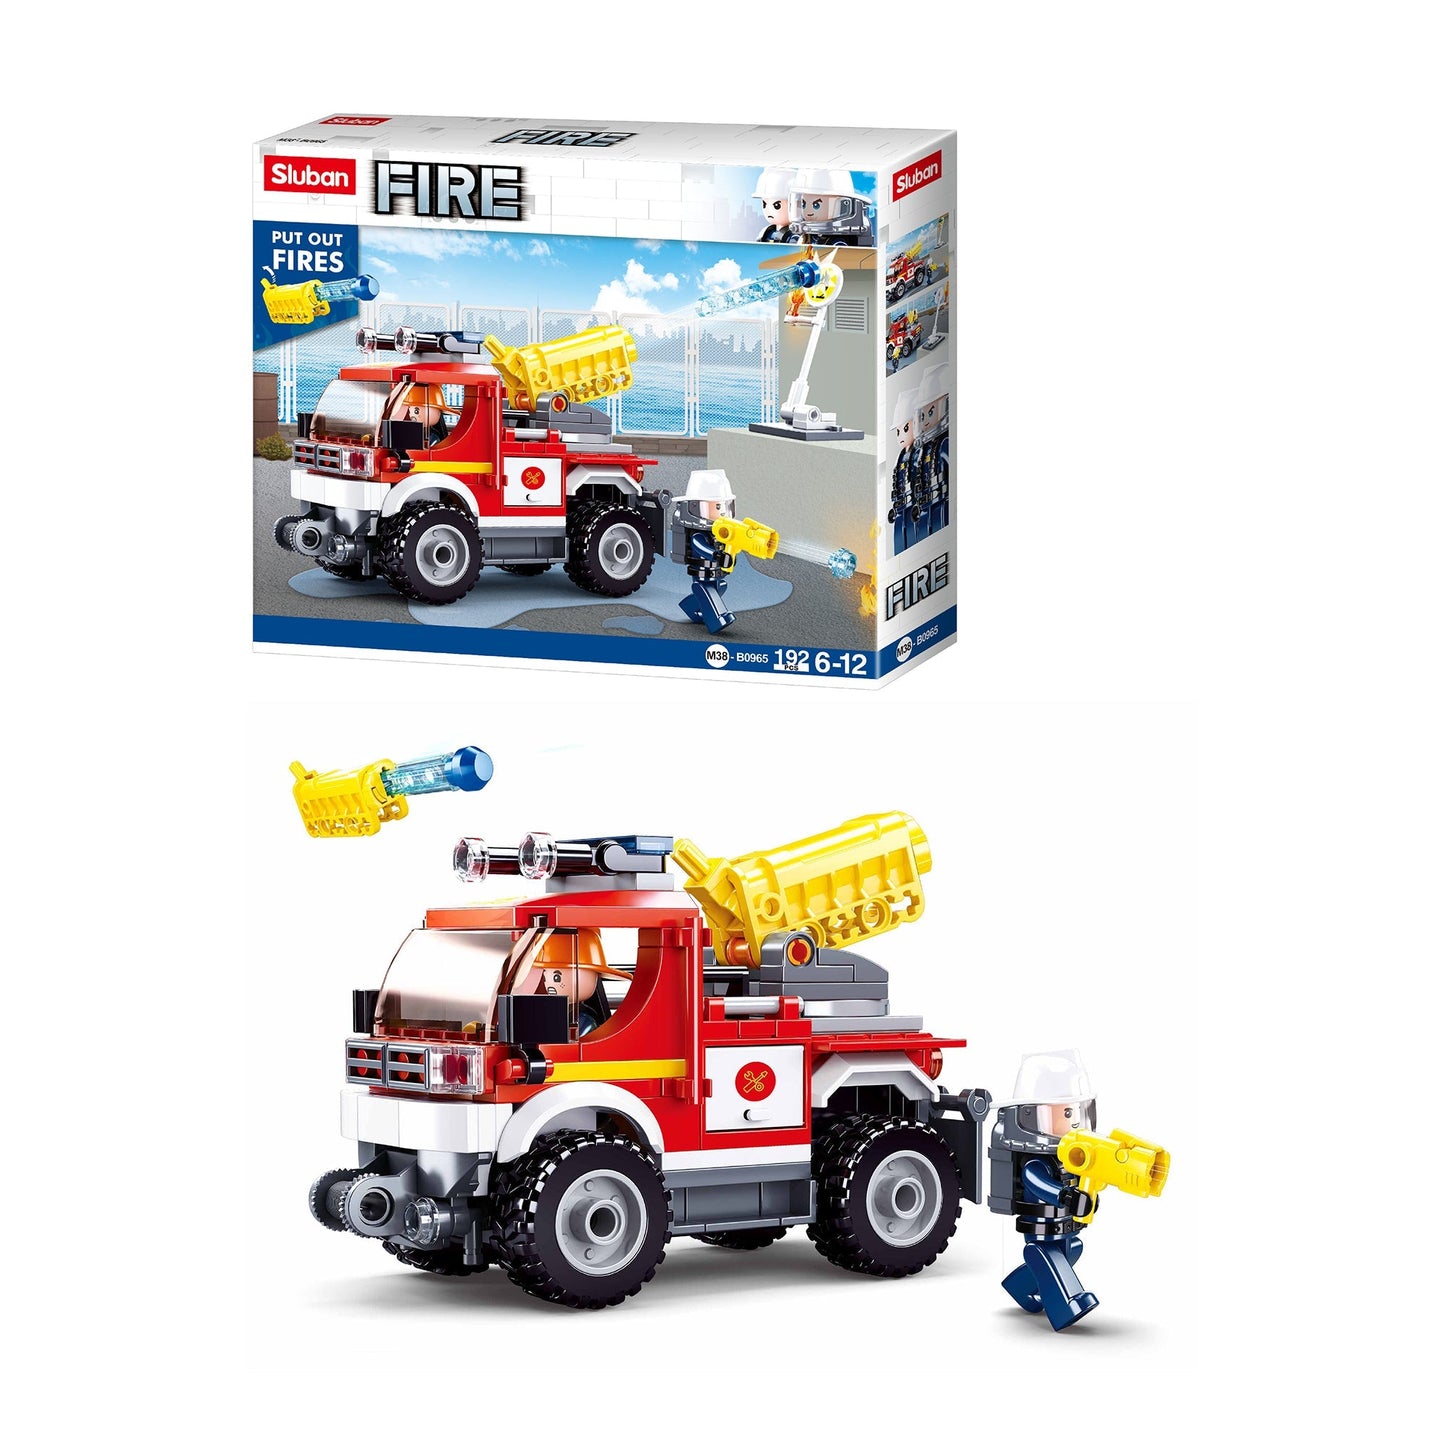 Playzu By Sluban Fire Engine Building Blocks Toys || 6years++ - Toys4All.in